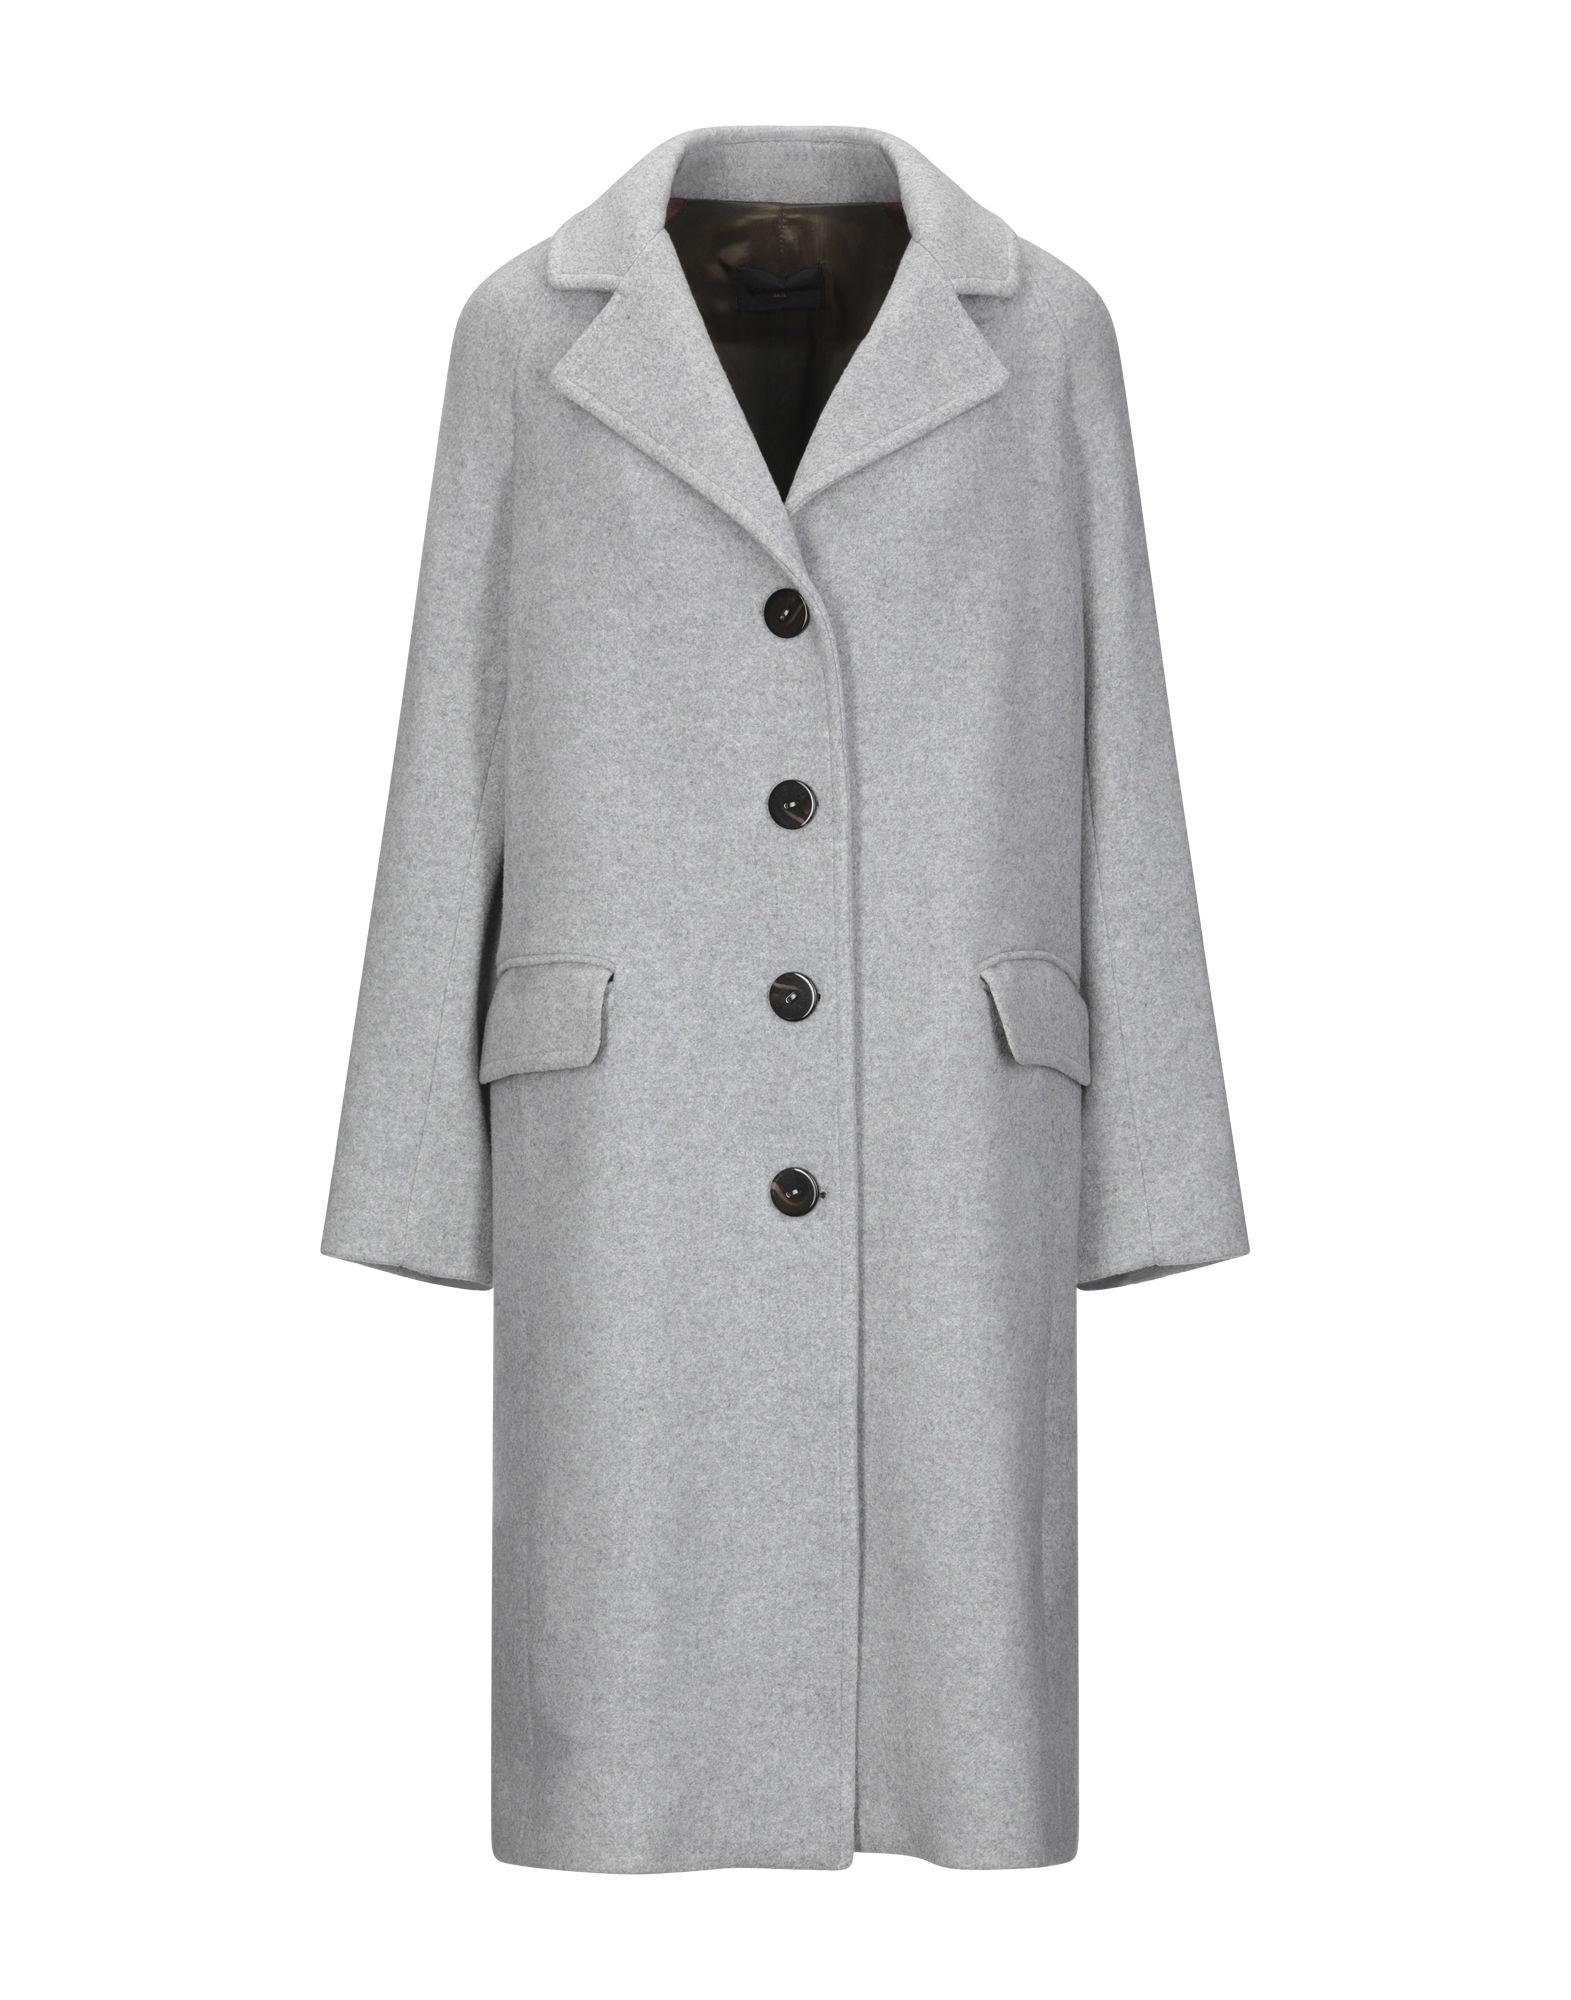 Paltò Synthetic Coat in Light Grey (Gray) - Lyst